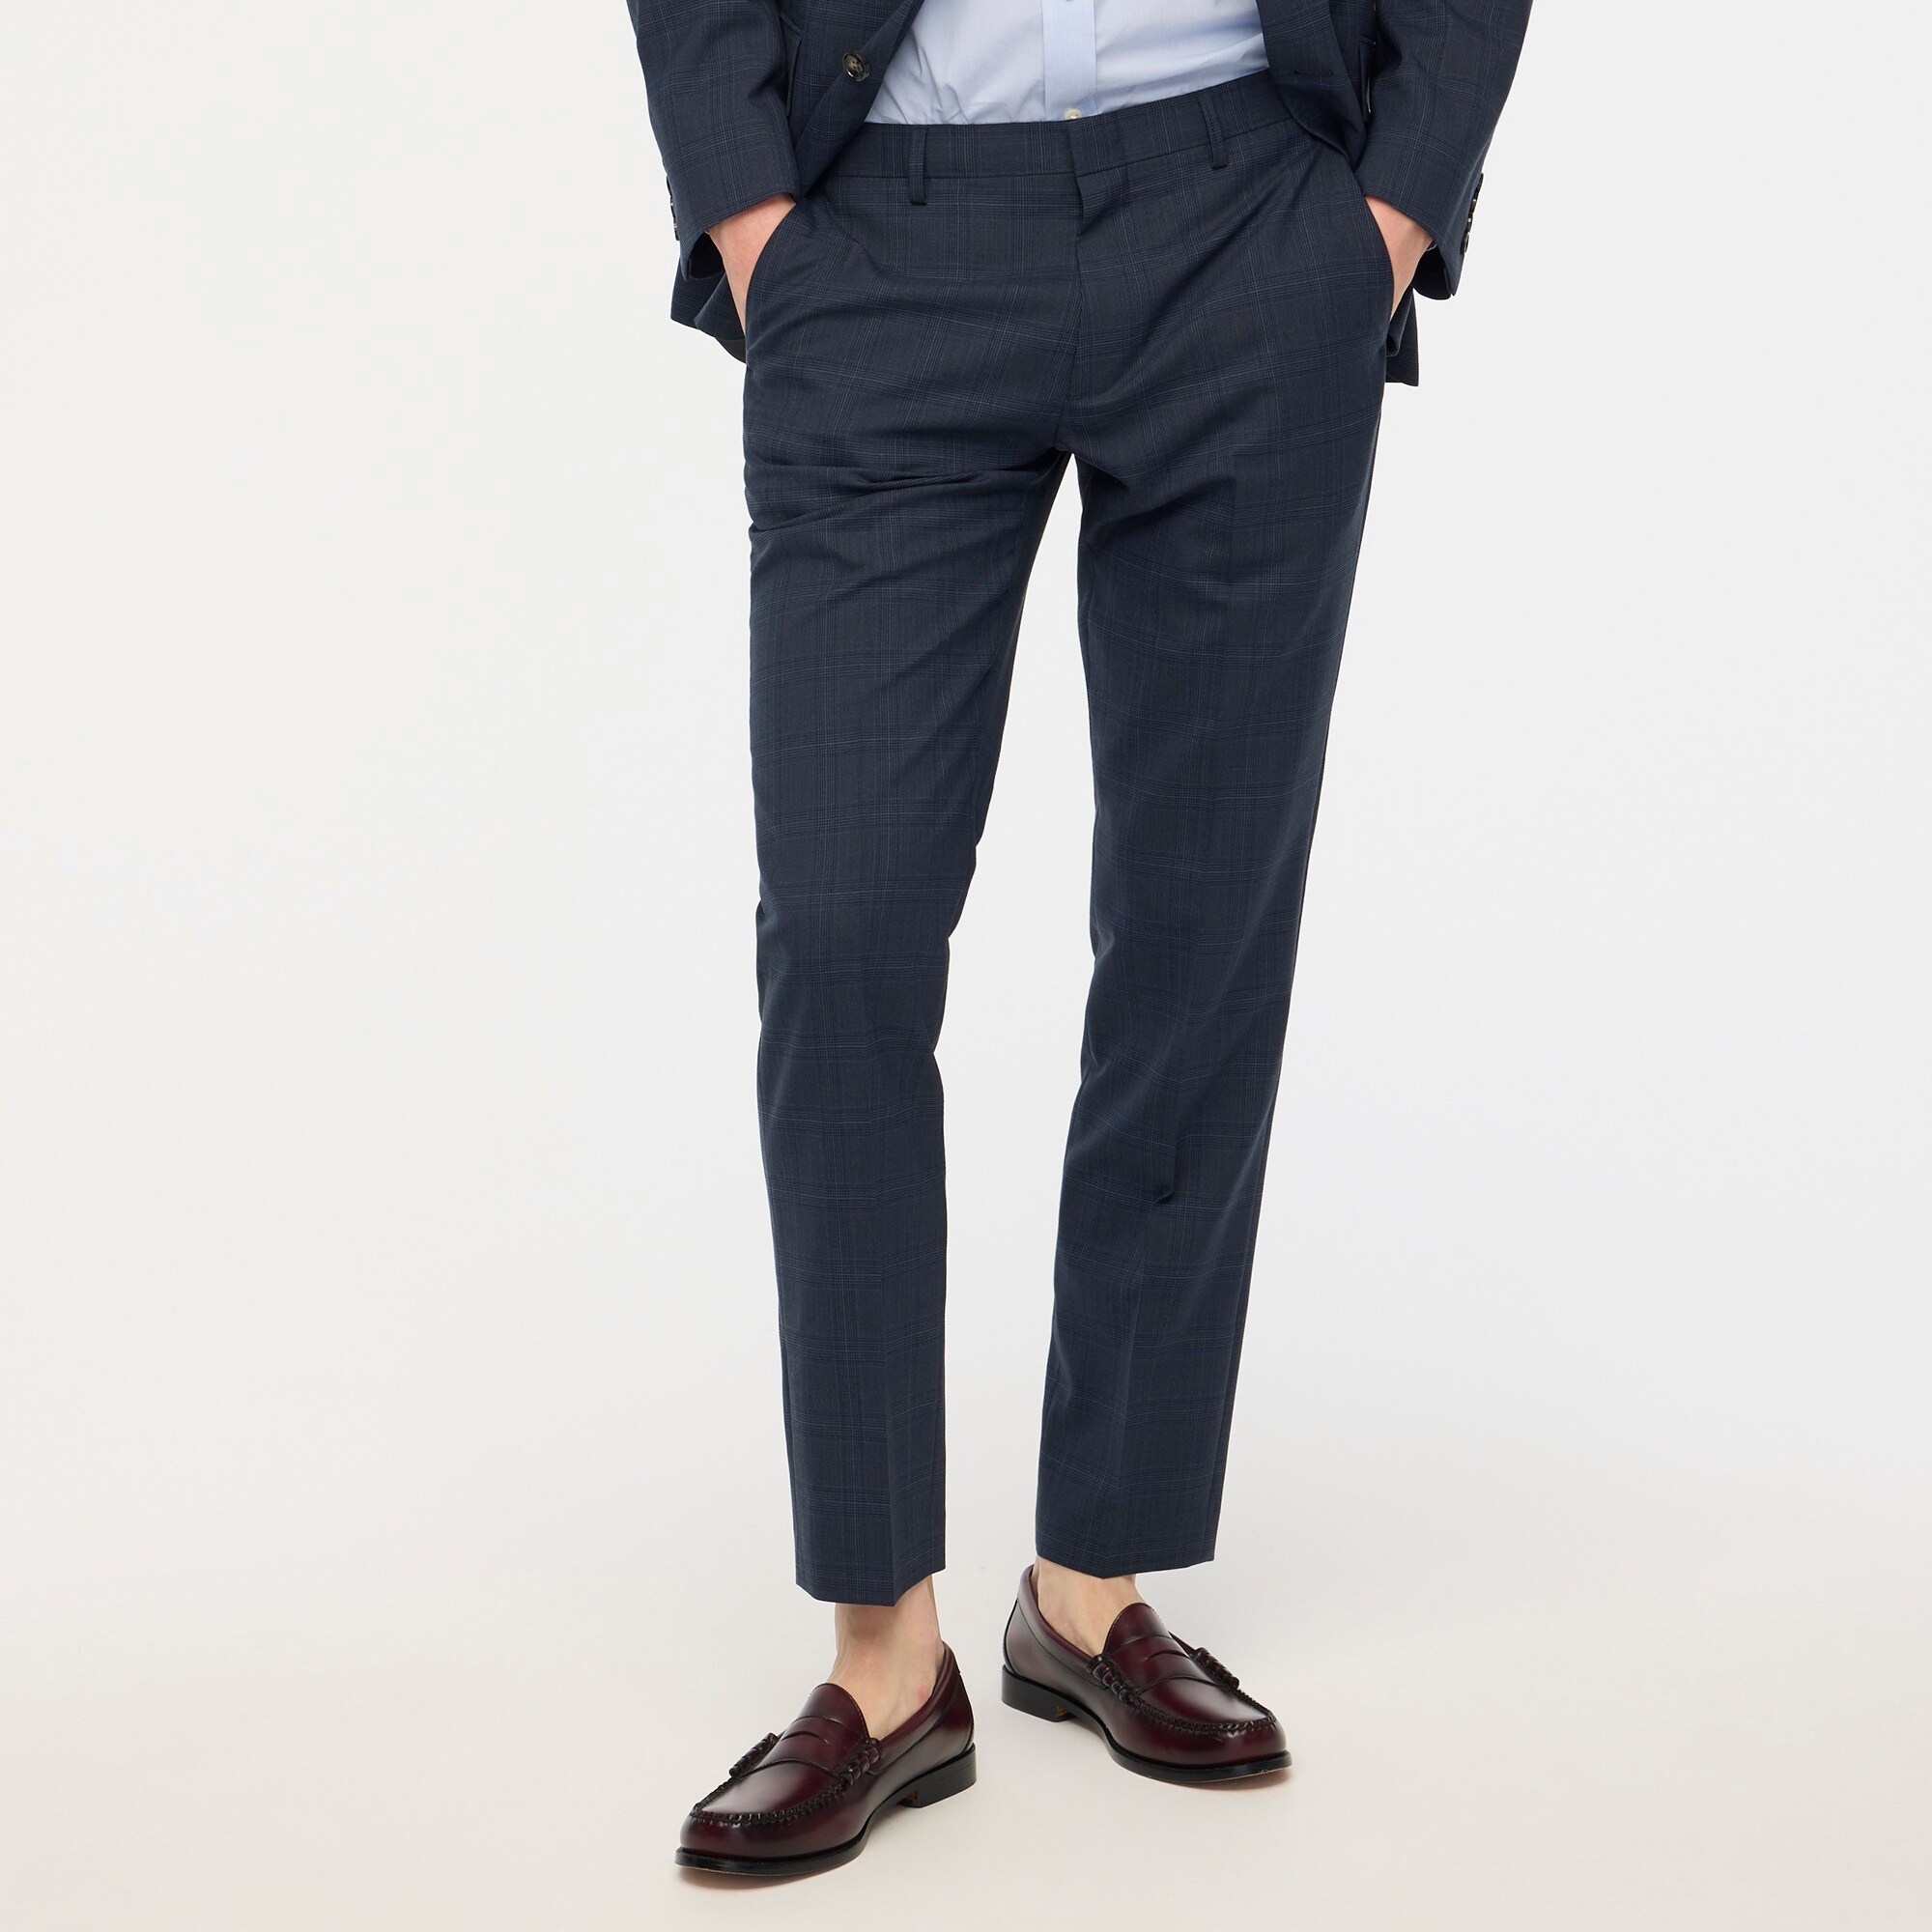  Slim-fit Thompson plaid suit pant